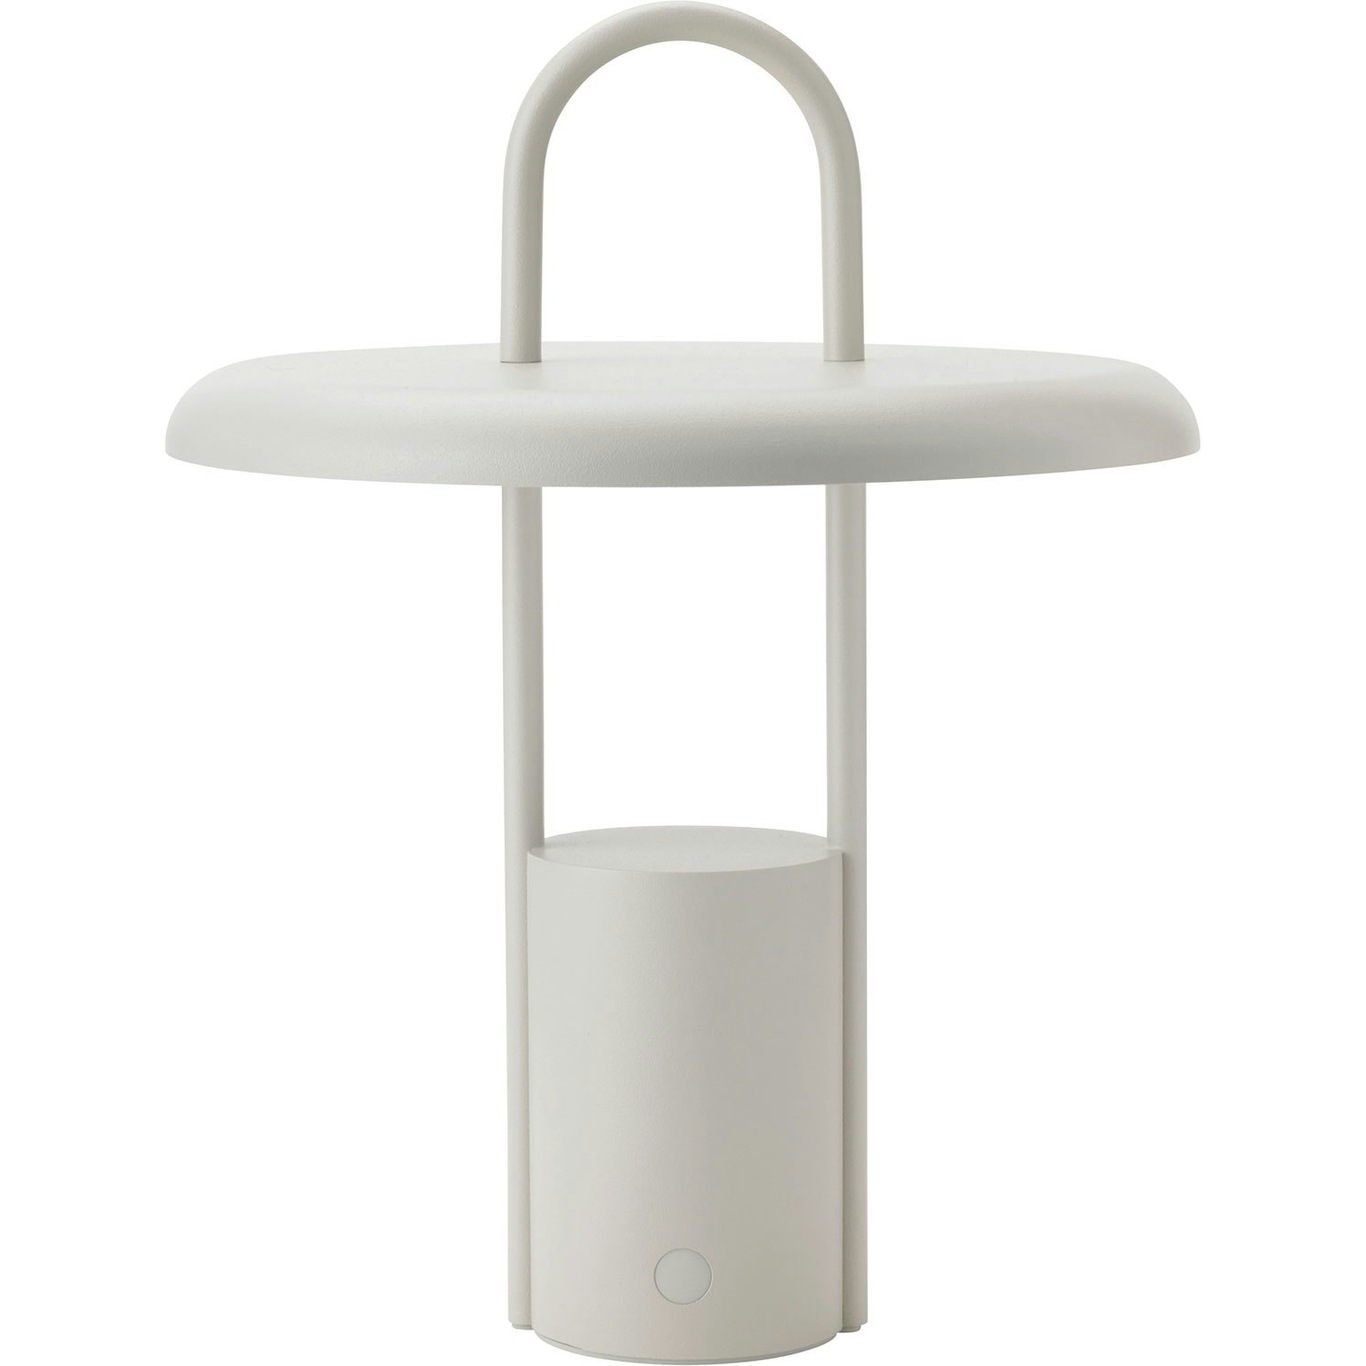 Portable @ cm, Stelton Sand Lamp 25 RoyalDesign - Pier Led